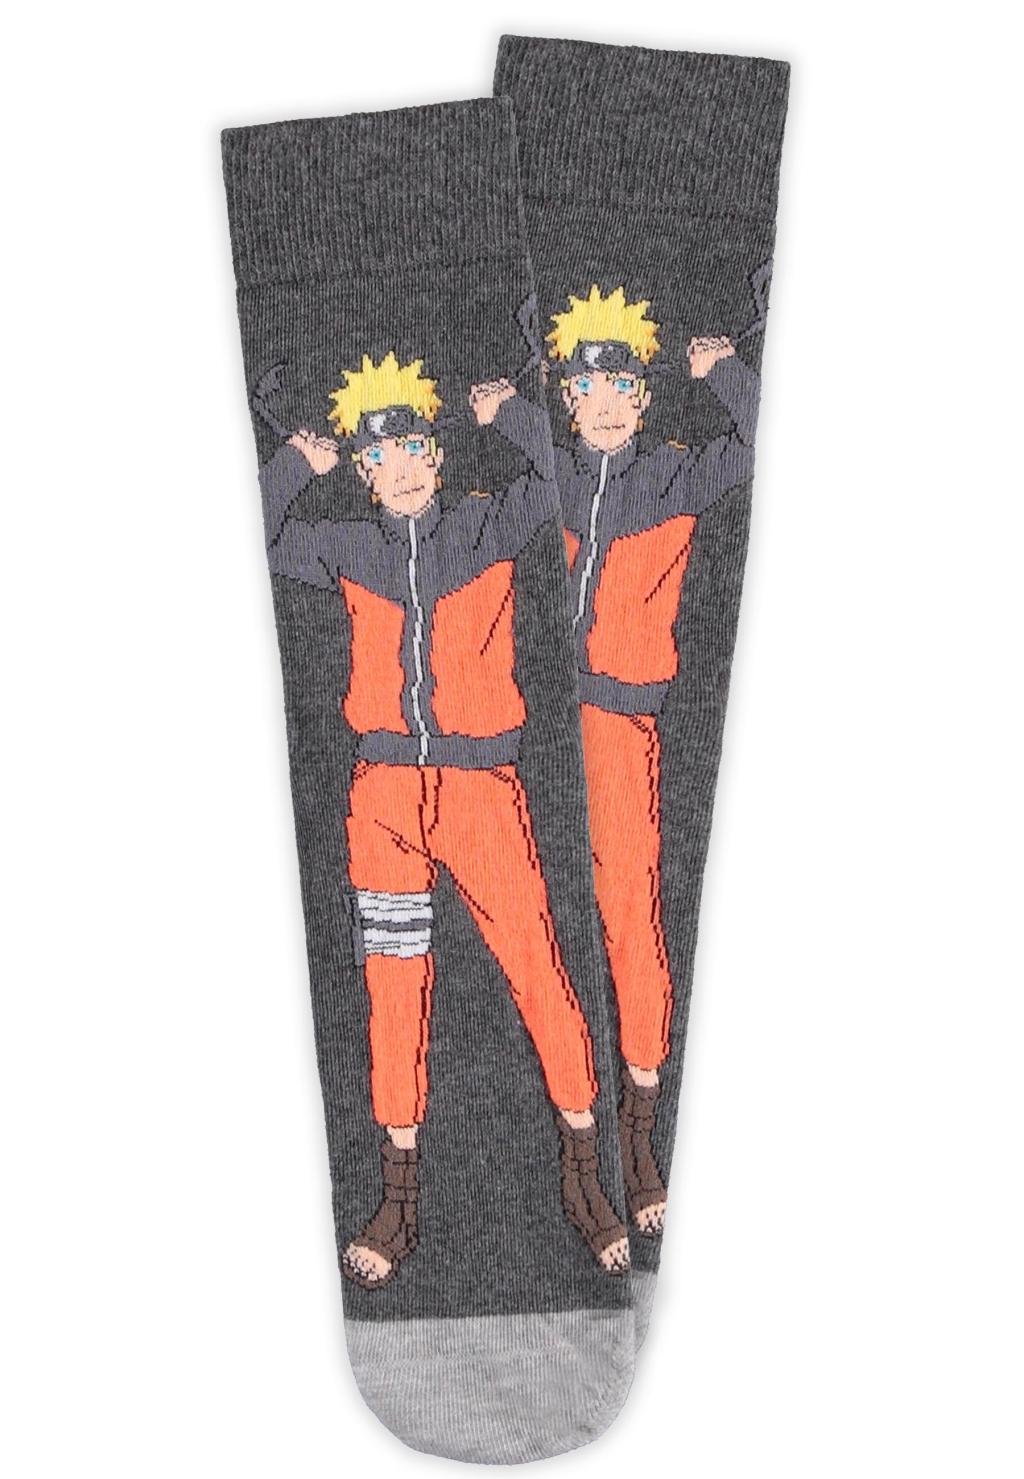 NARUTO SHIPPUDEN - Naruto - Pack of 3 pairs of socks (T43-46)